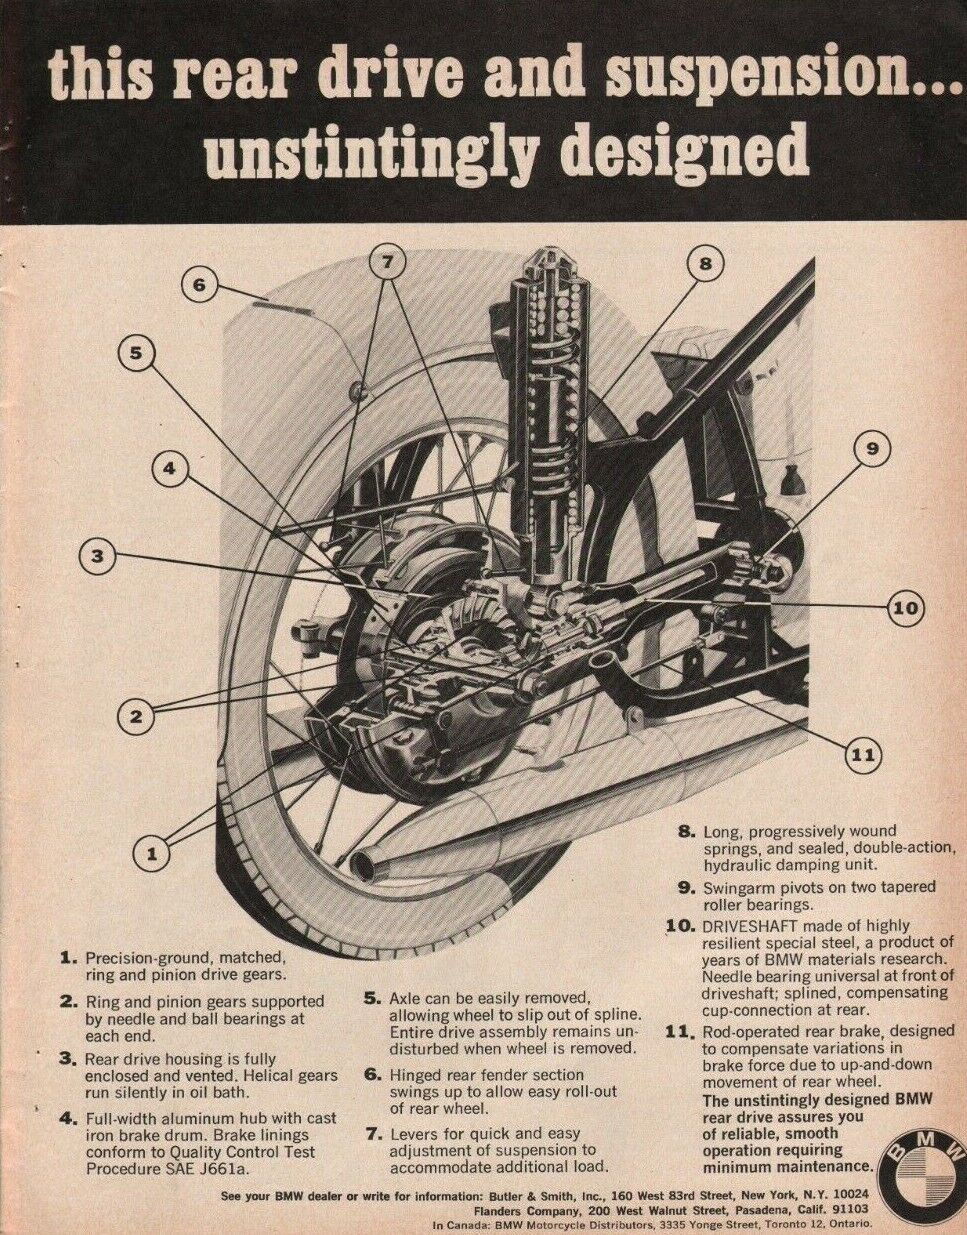 1968 BMW Rear Drive & Suspension - Vintage Motorcycle Advertisement